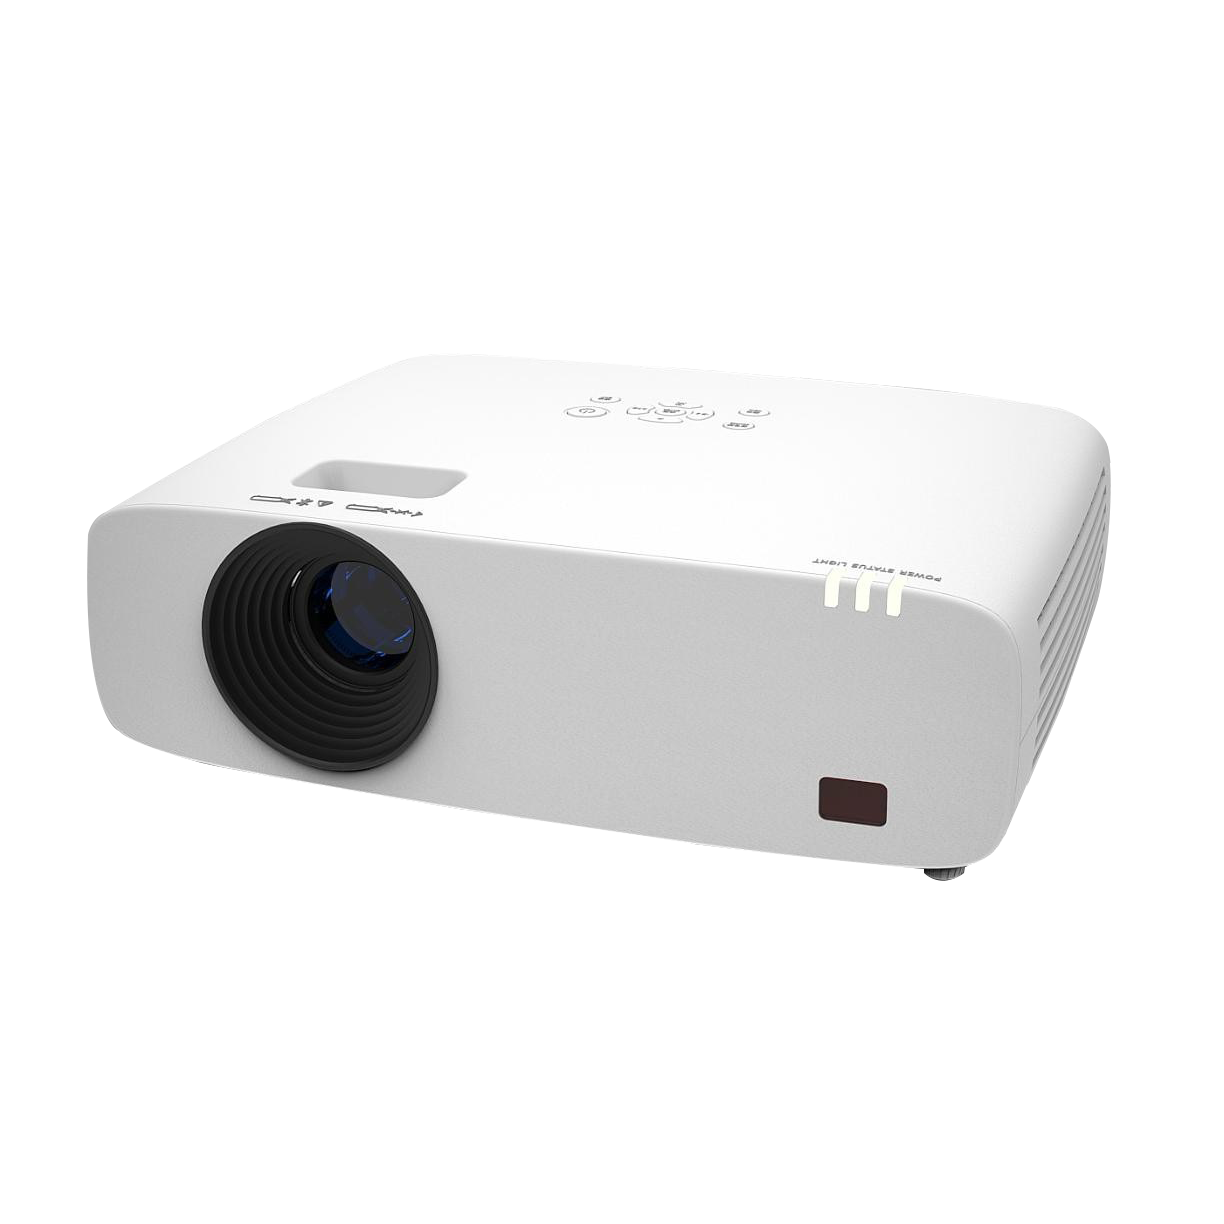 SMX Projector 5300 lumen XGA 3LCD Laser Projector For Home Cinema